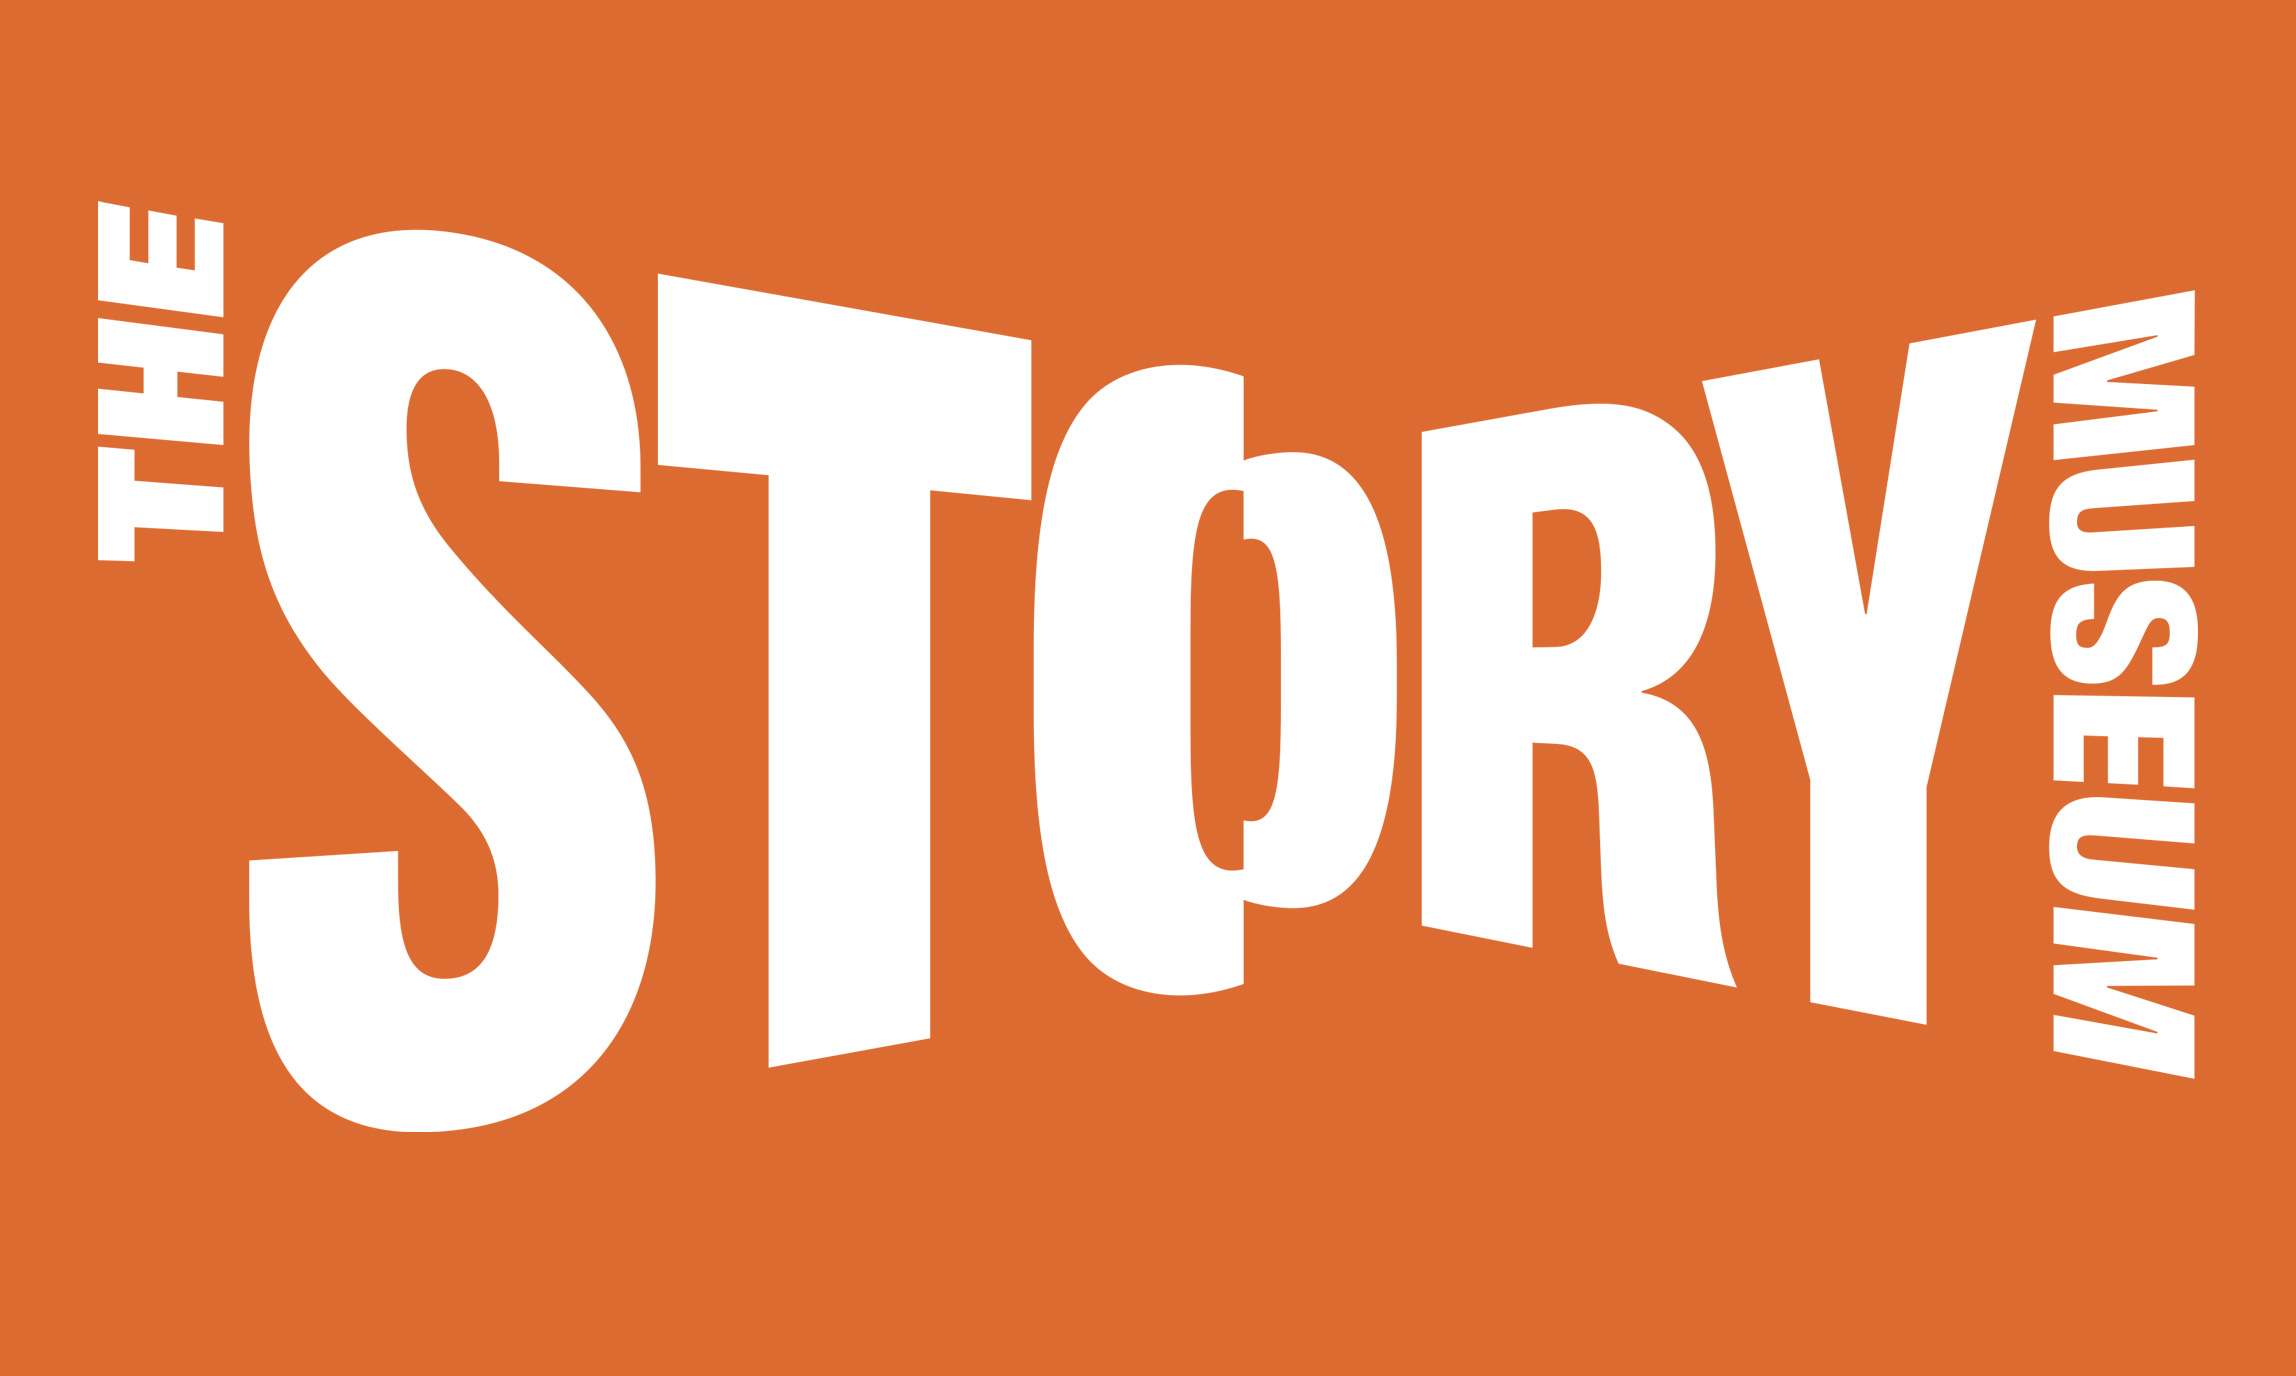 story museum oxford logo